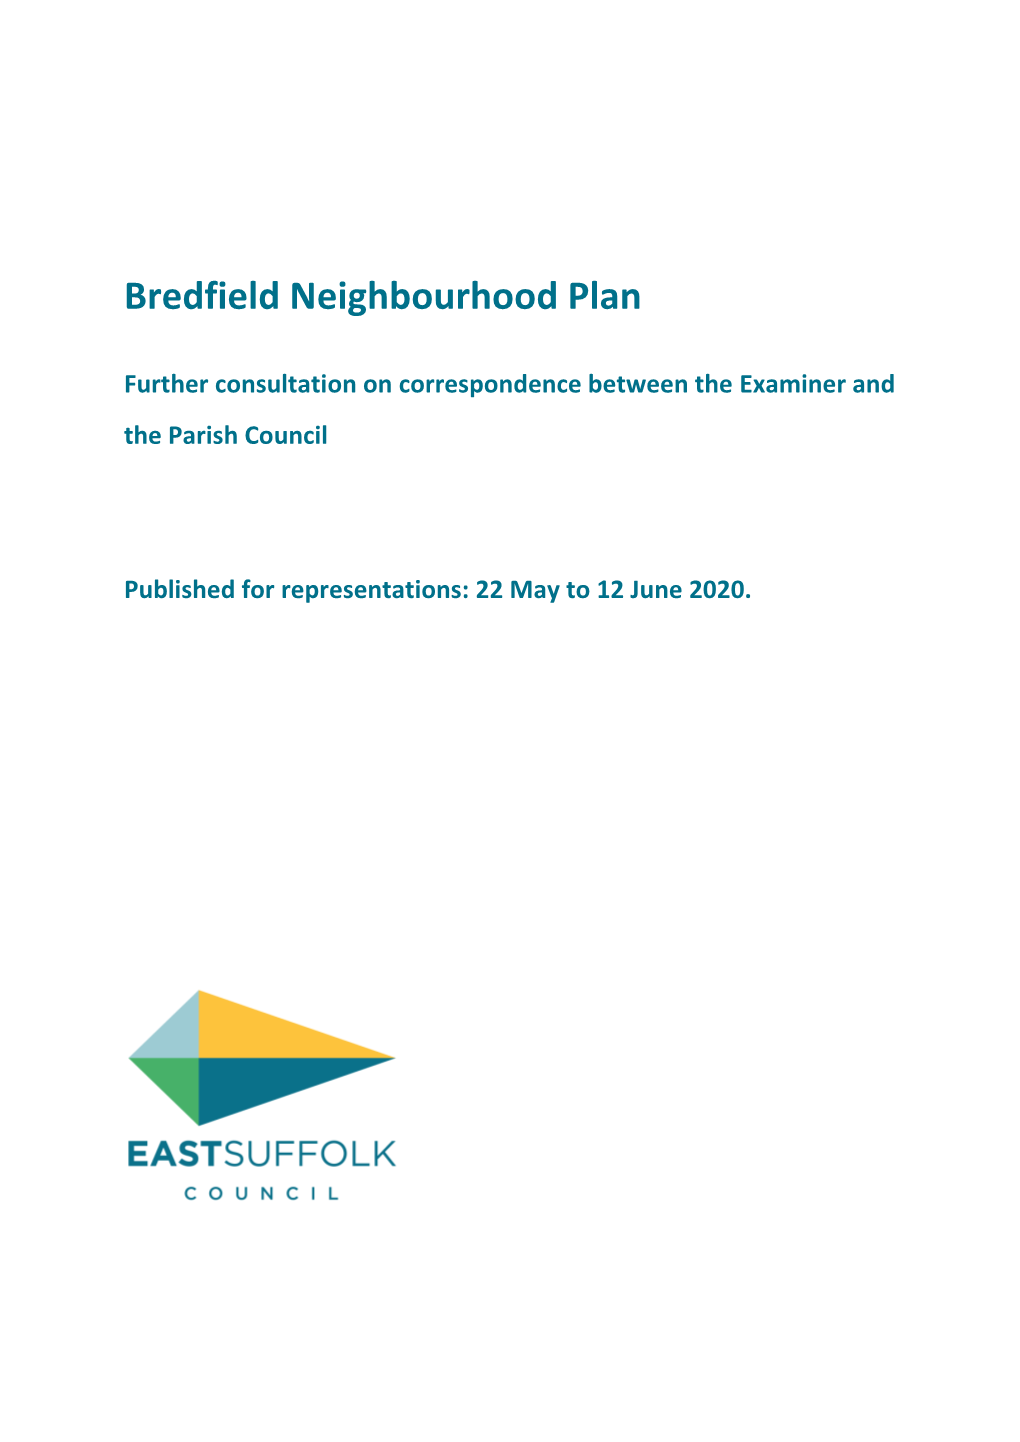 Bredfield Neighbourhood Plan